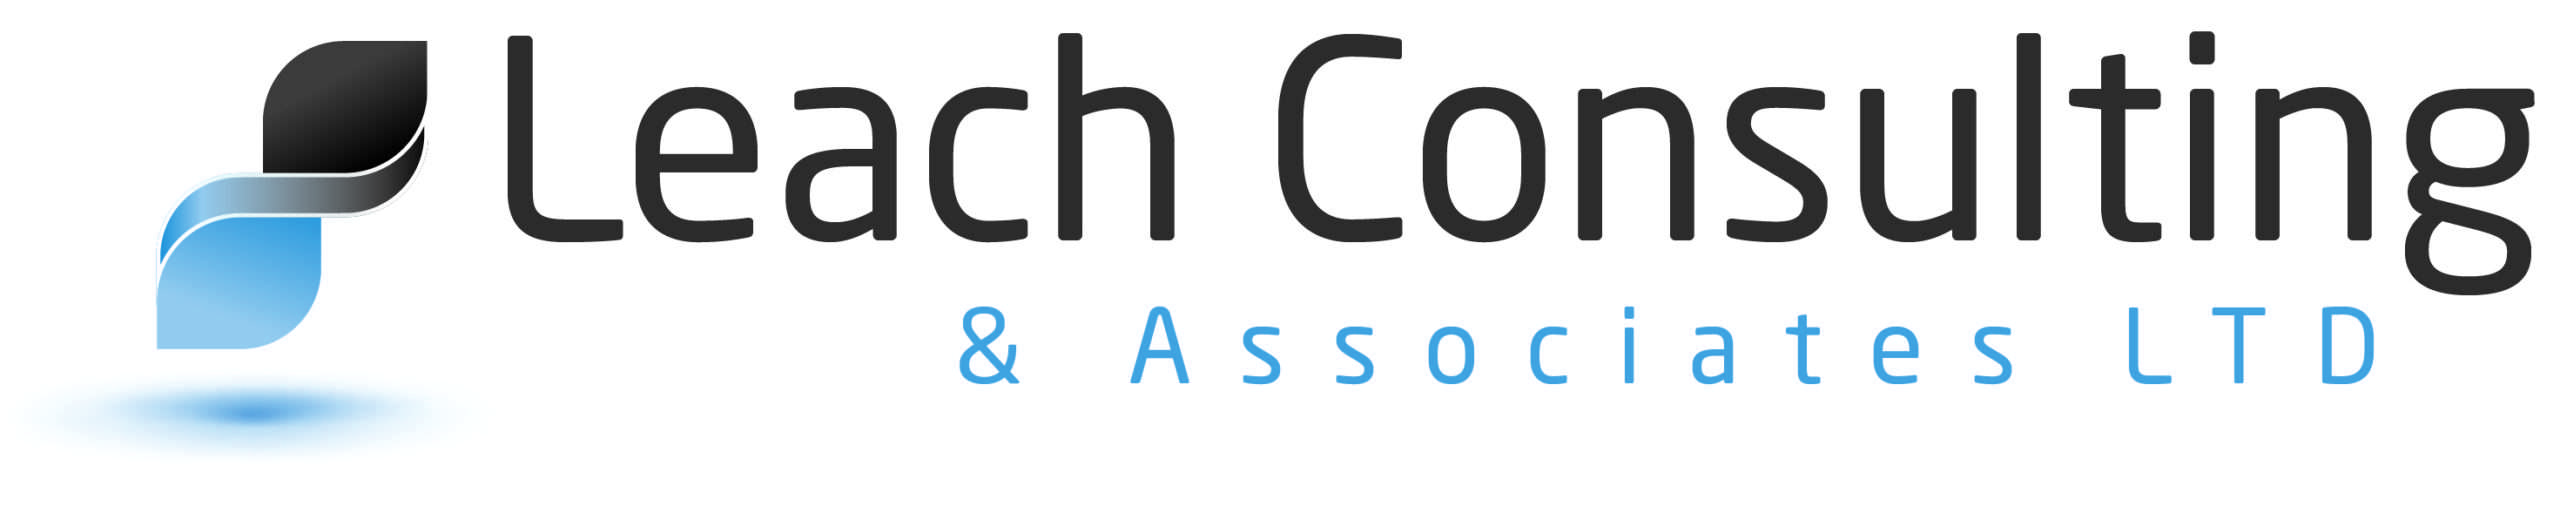 Leach Consulting & Associates